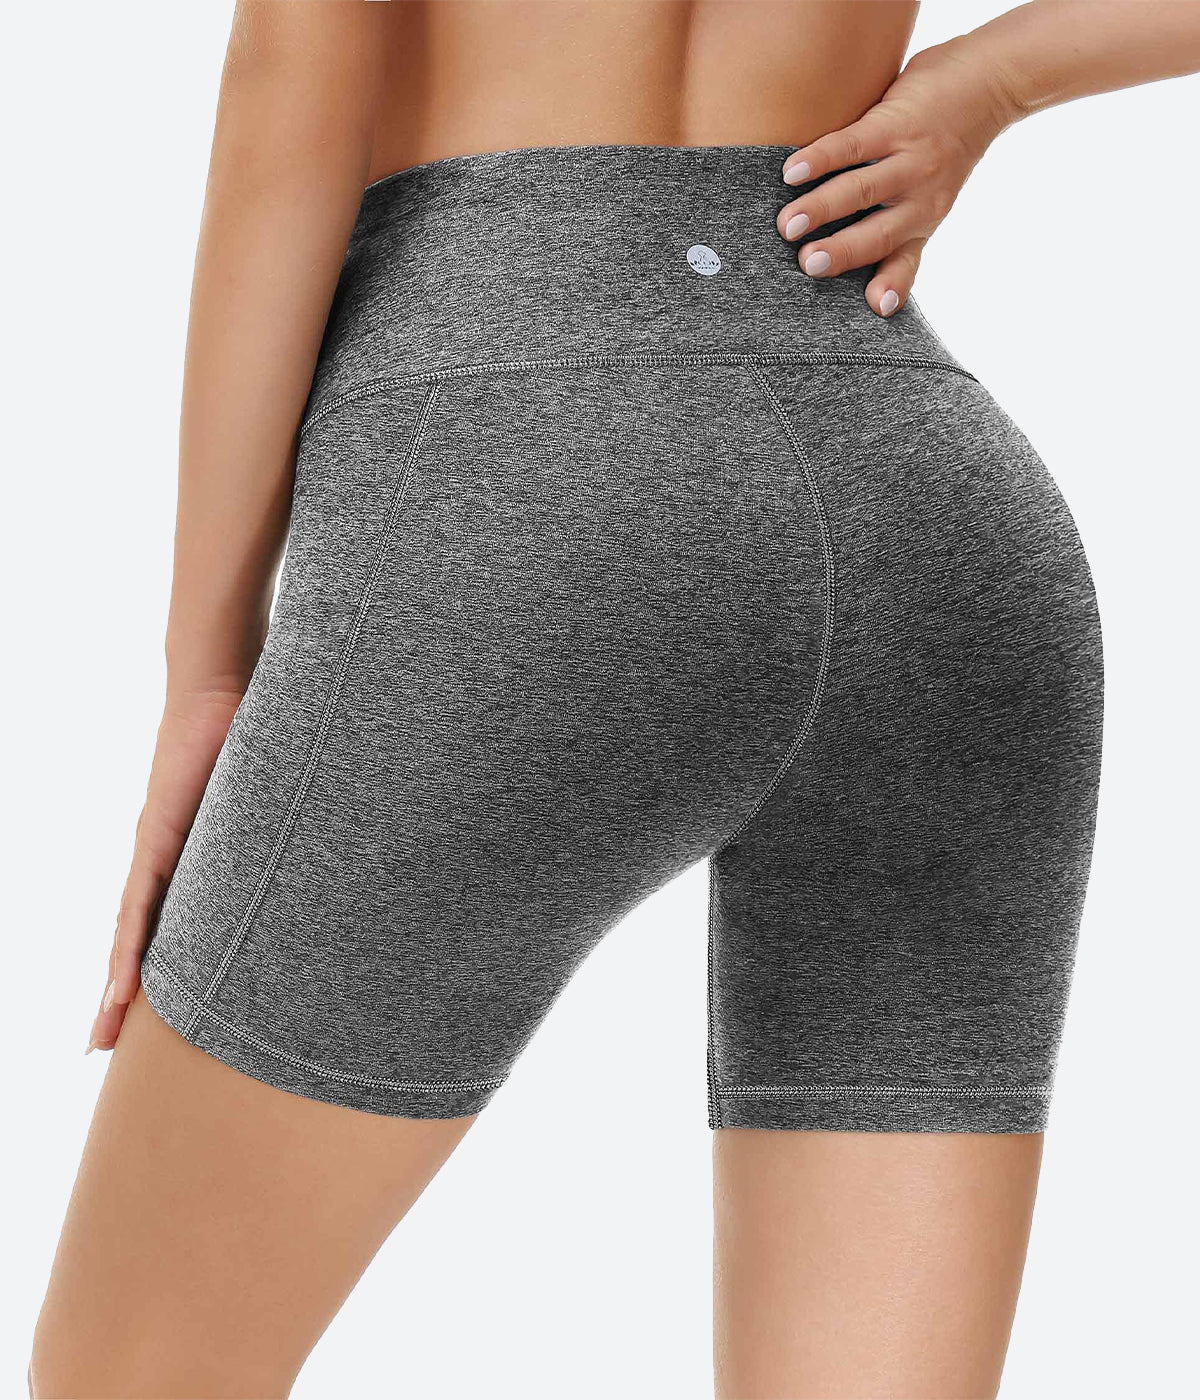 CTHH 4 Pack Biker Shorts for Women – 5 High Waist Tummy Control